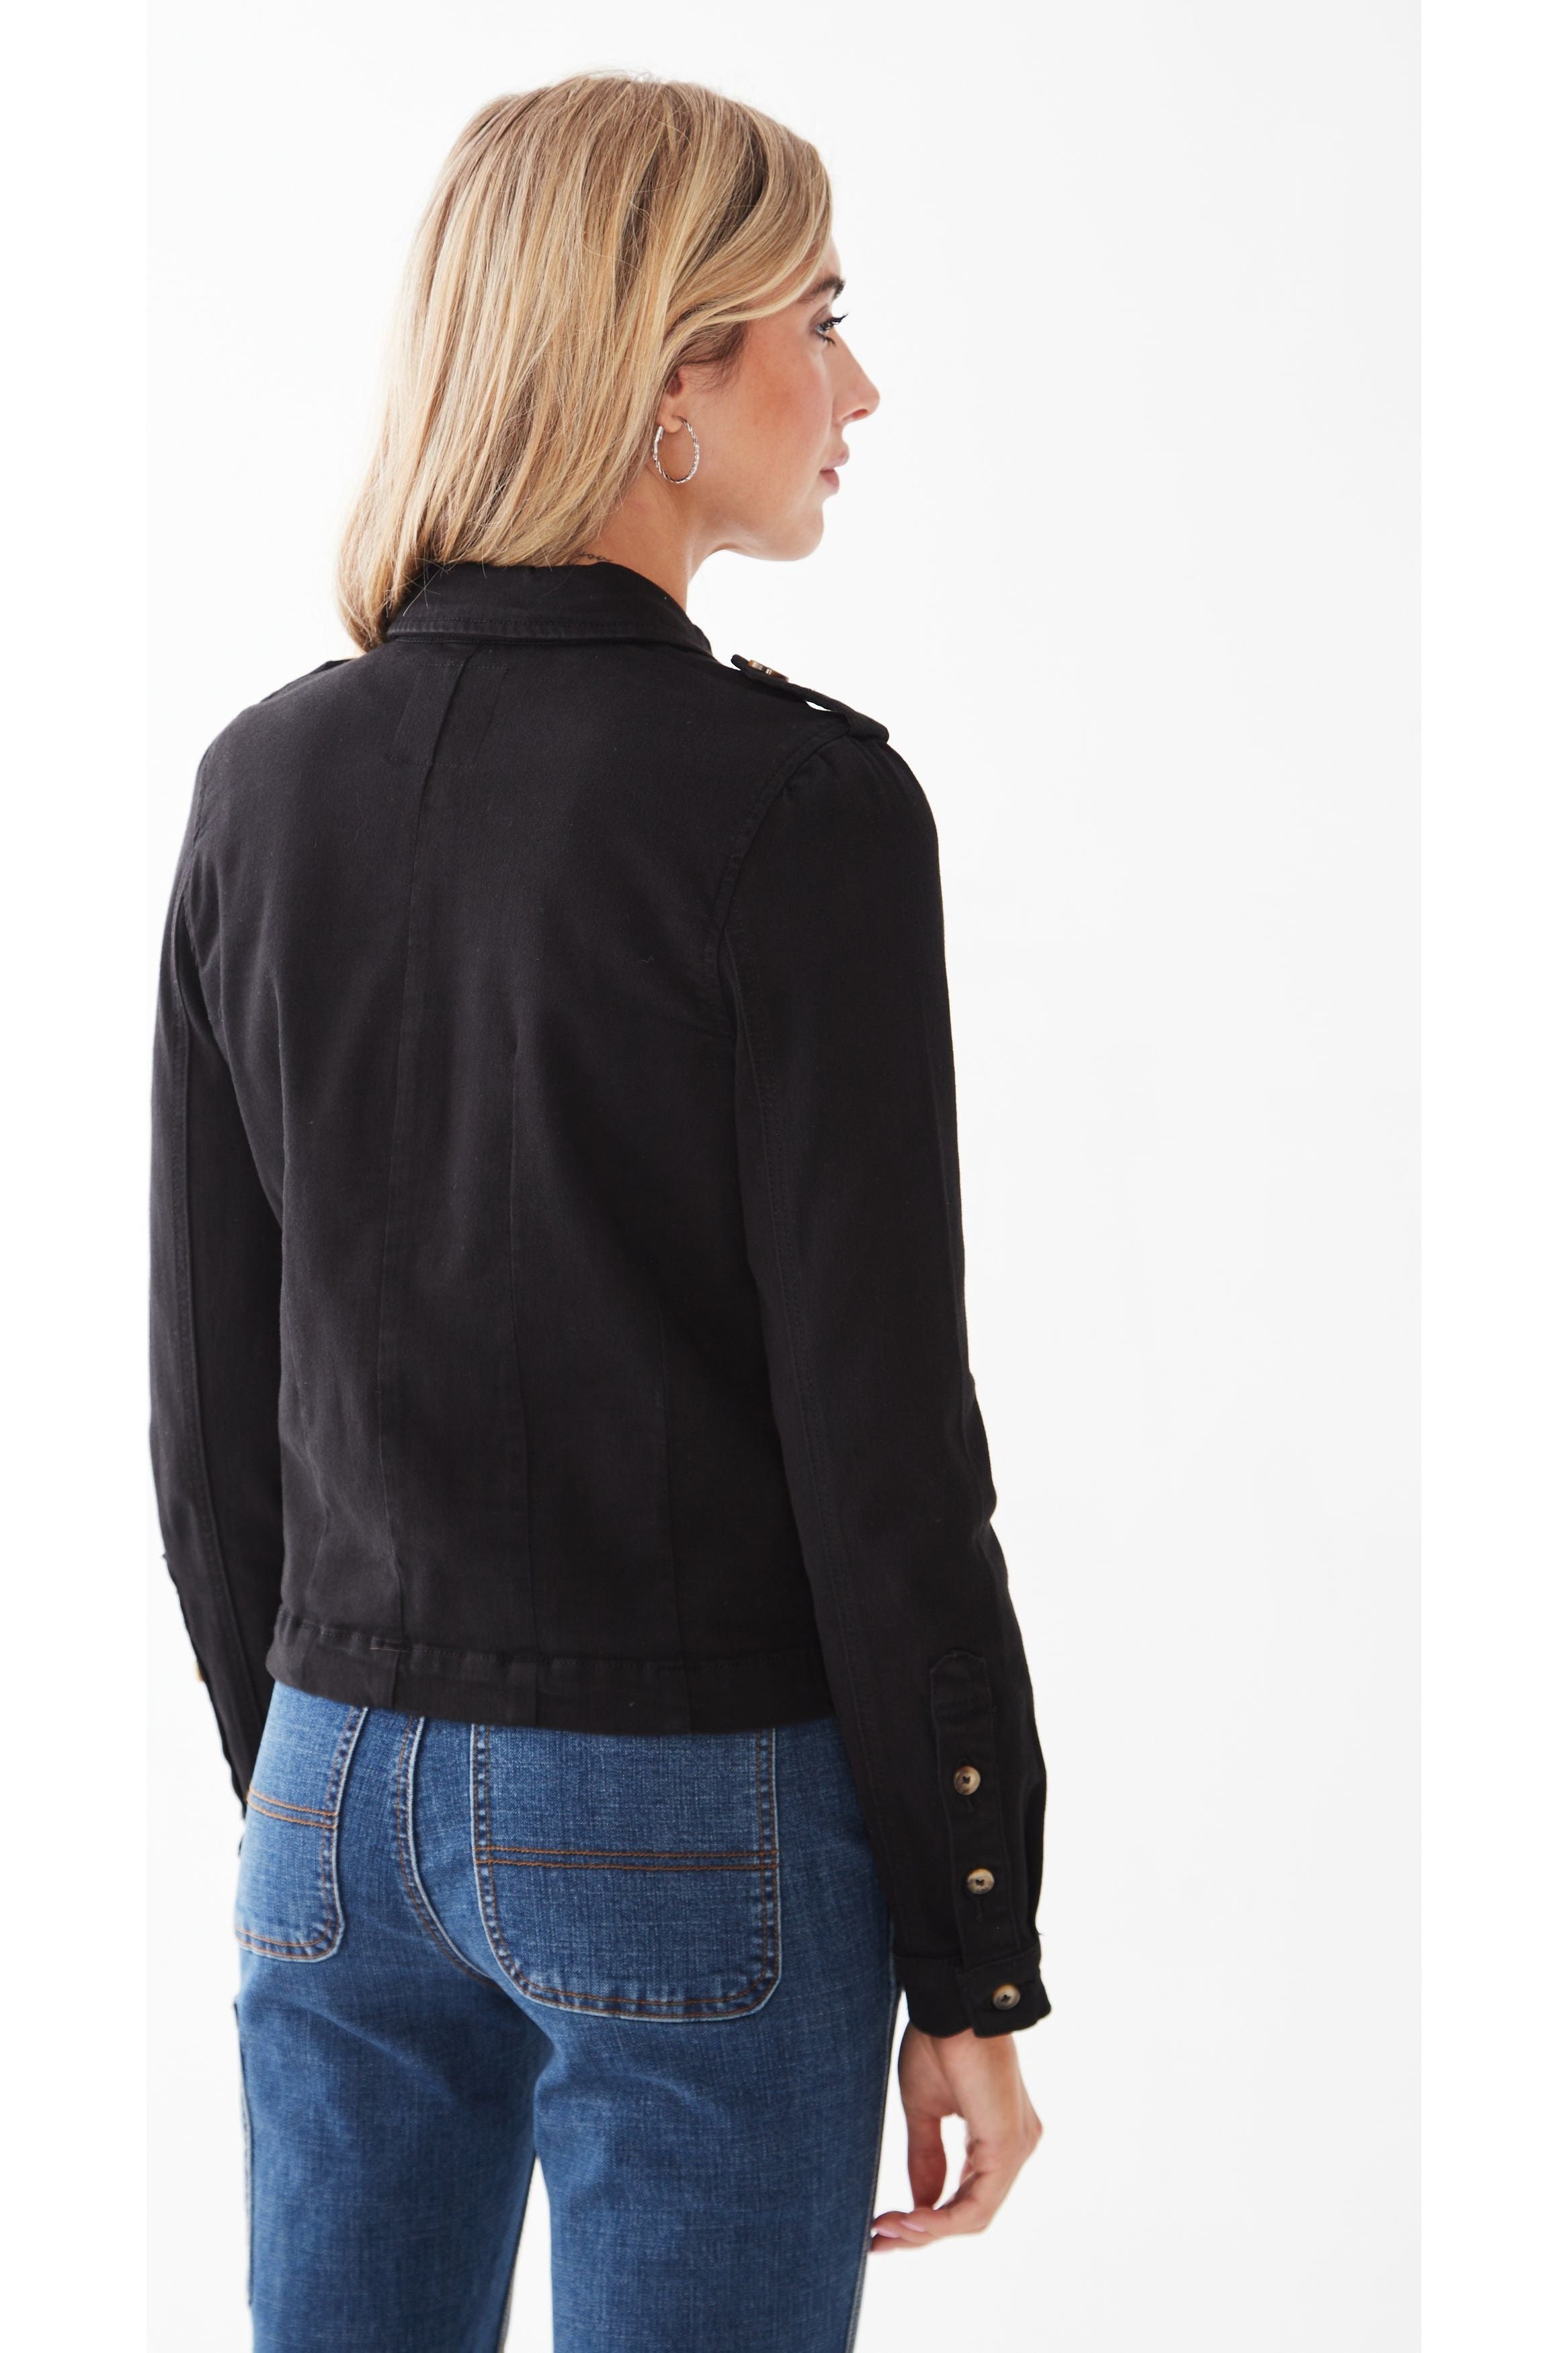 FDJ Vintage Crop Jacket - Style 1394511, back, black